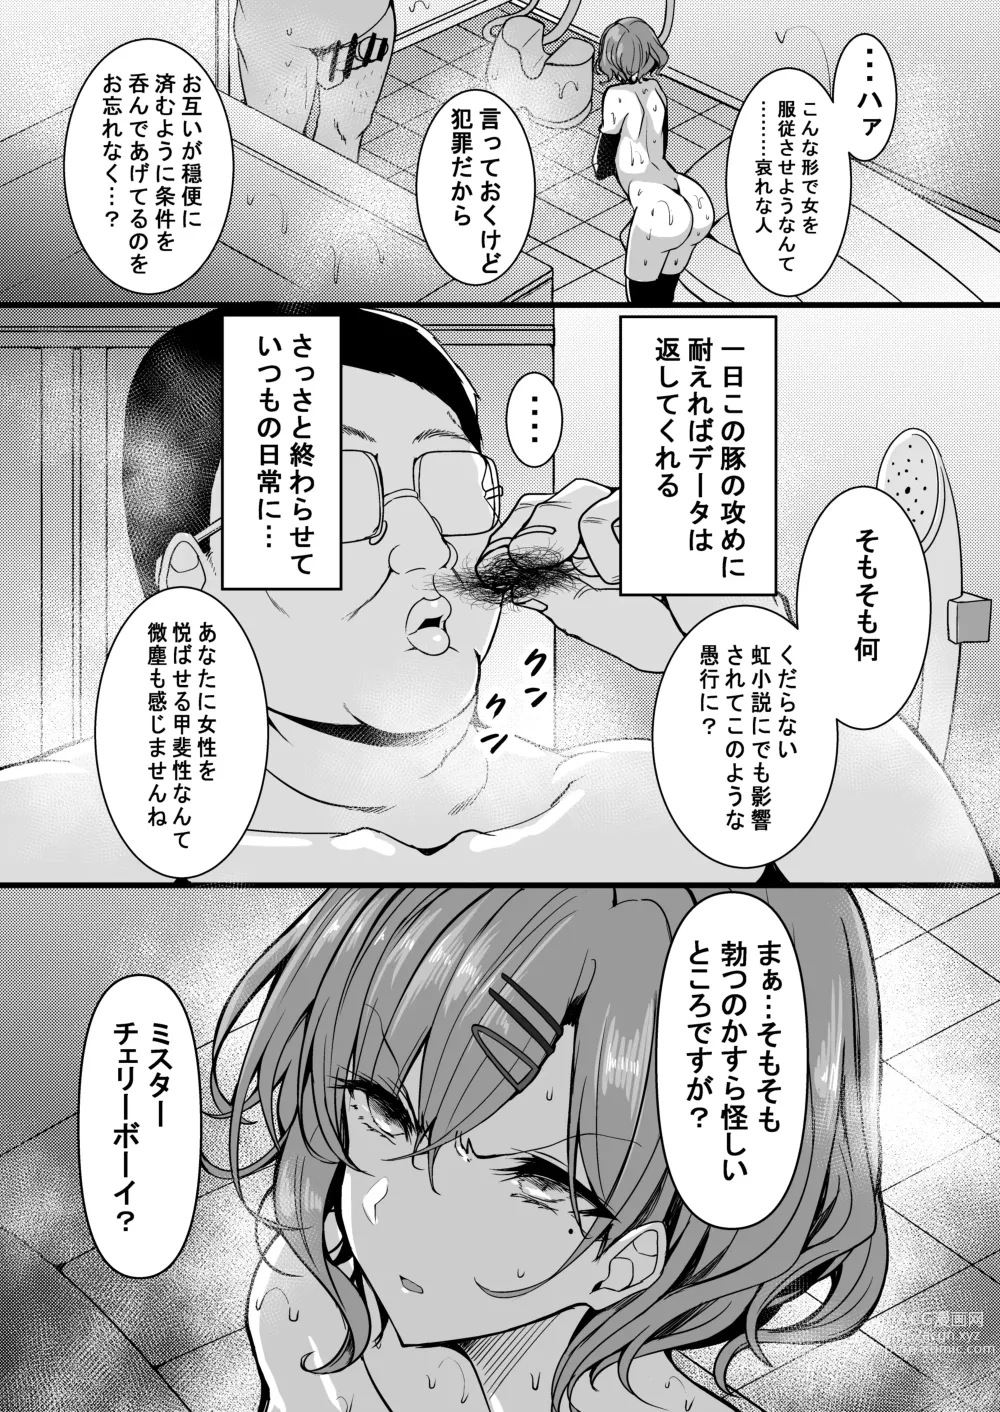 Page 6 of doujinshi HTSK15